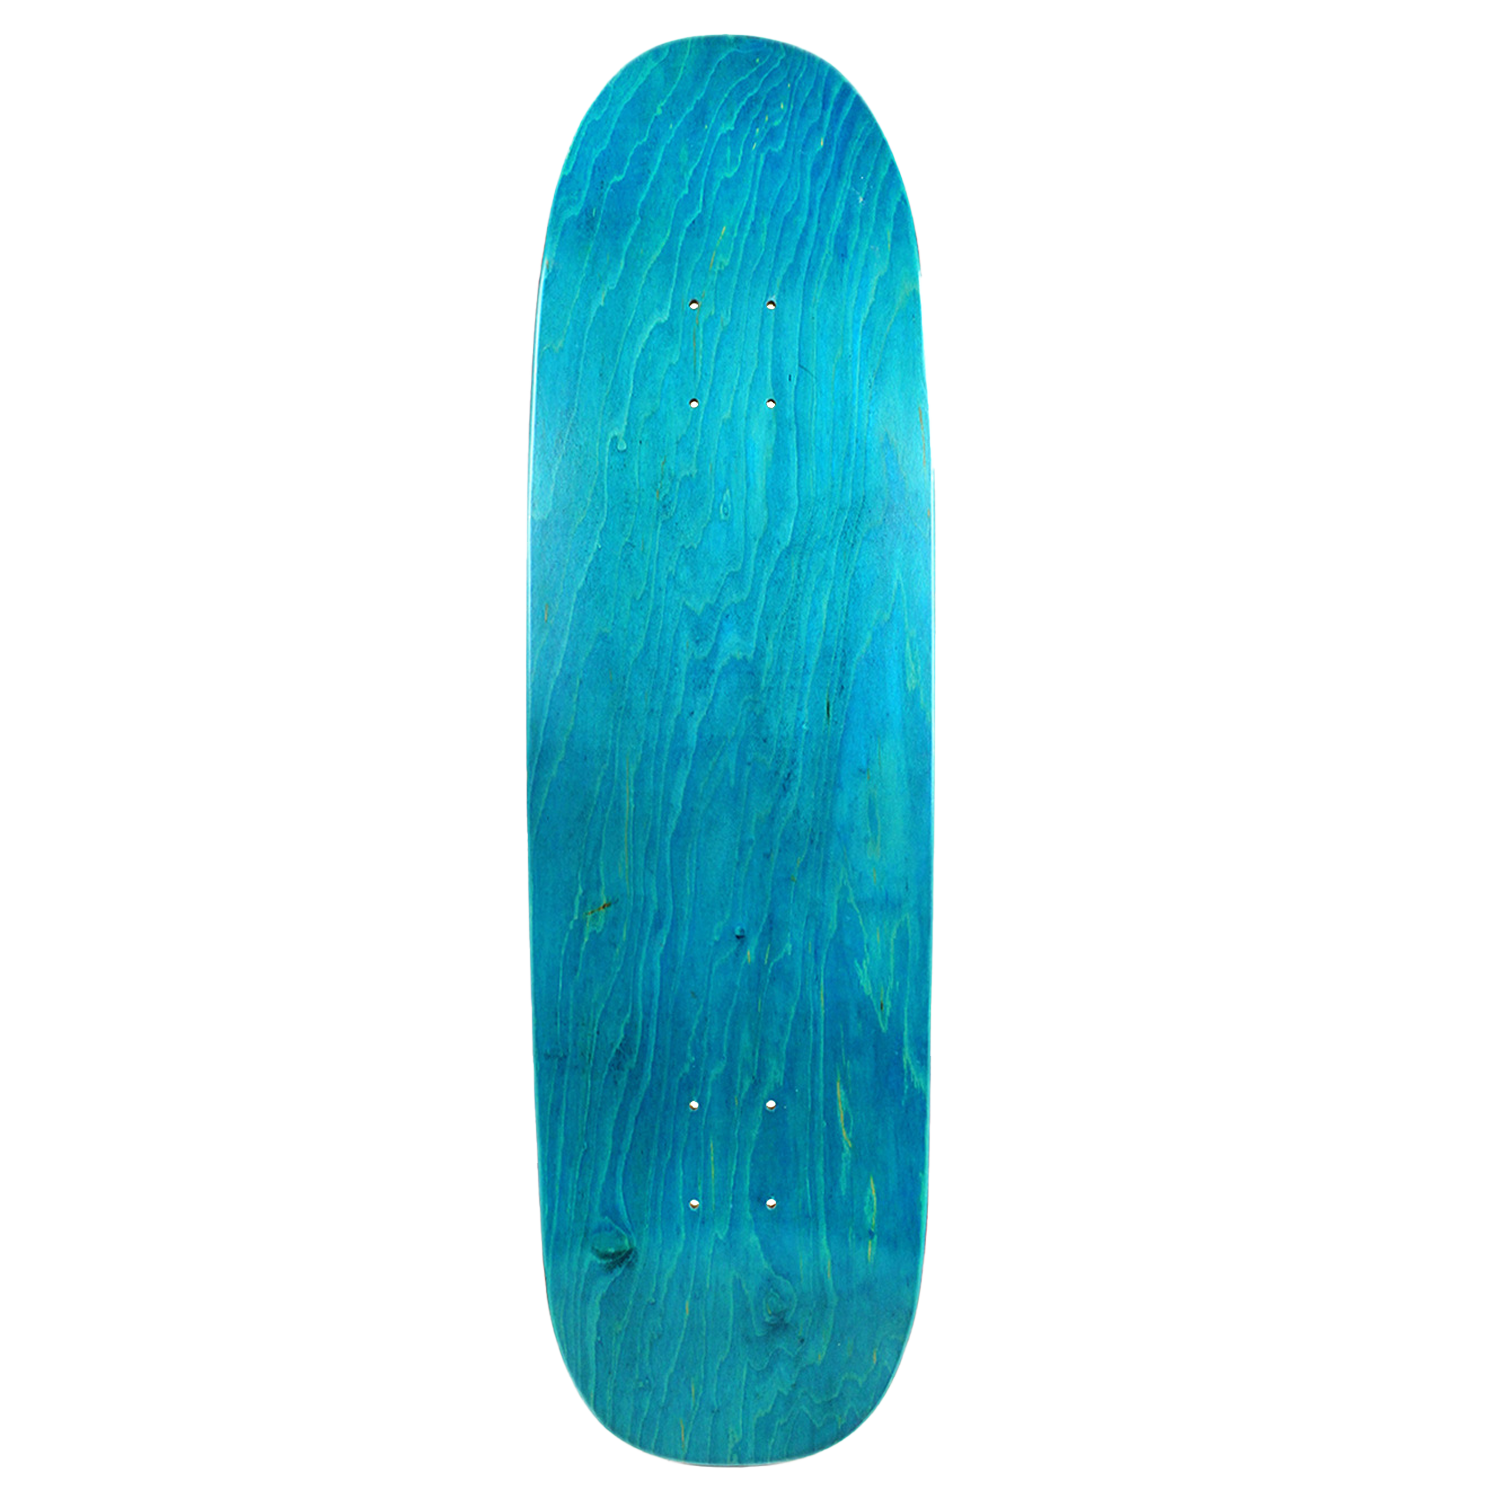 Moose Skateboard Old School Deck Popsicle Nose Stain Blue 8.75in x 32.1in